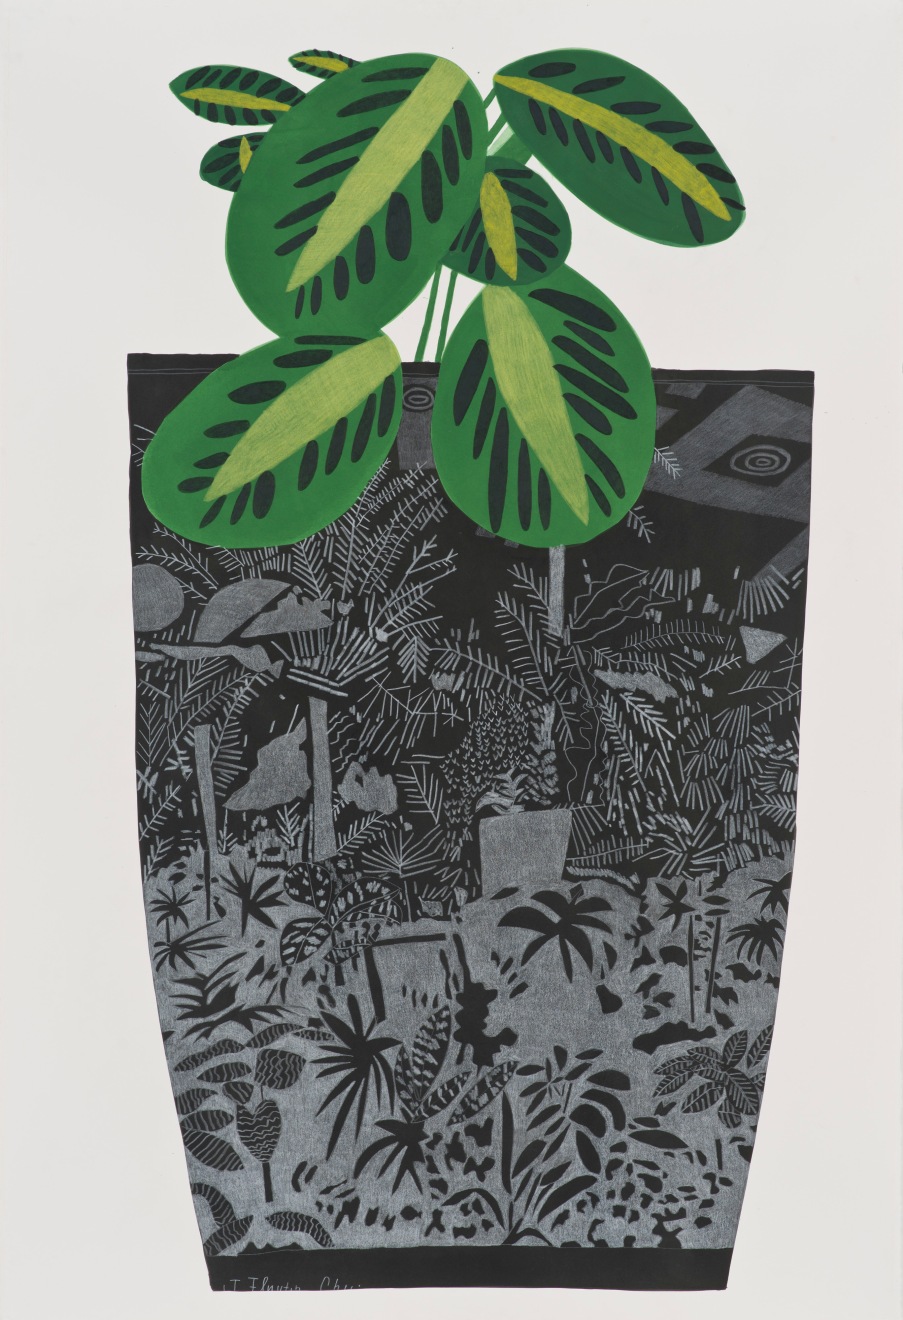 Jonas Wood Black Landscape Pot with Kiwi Plant 1, 2014